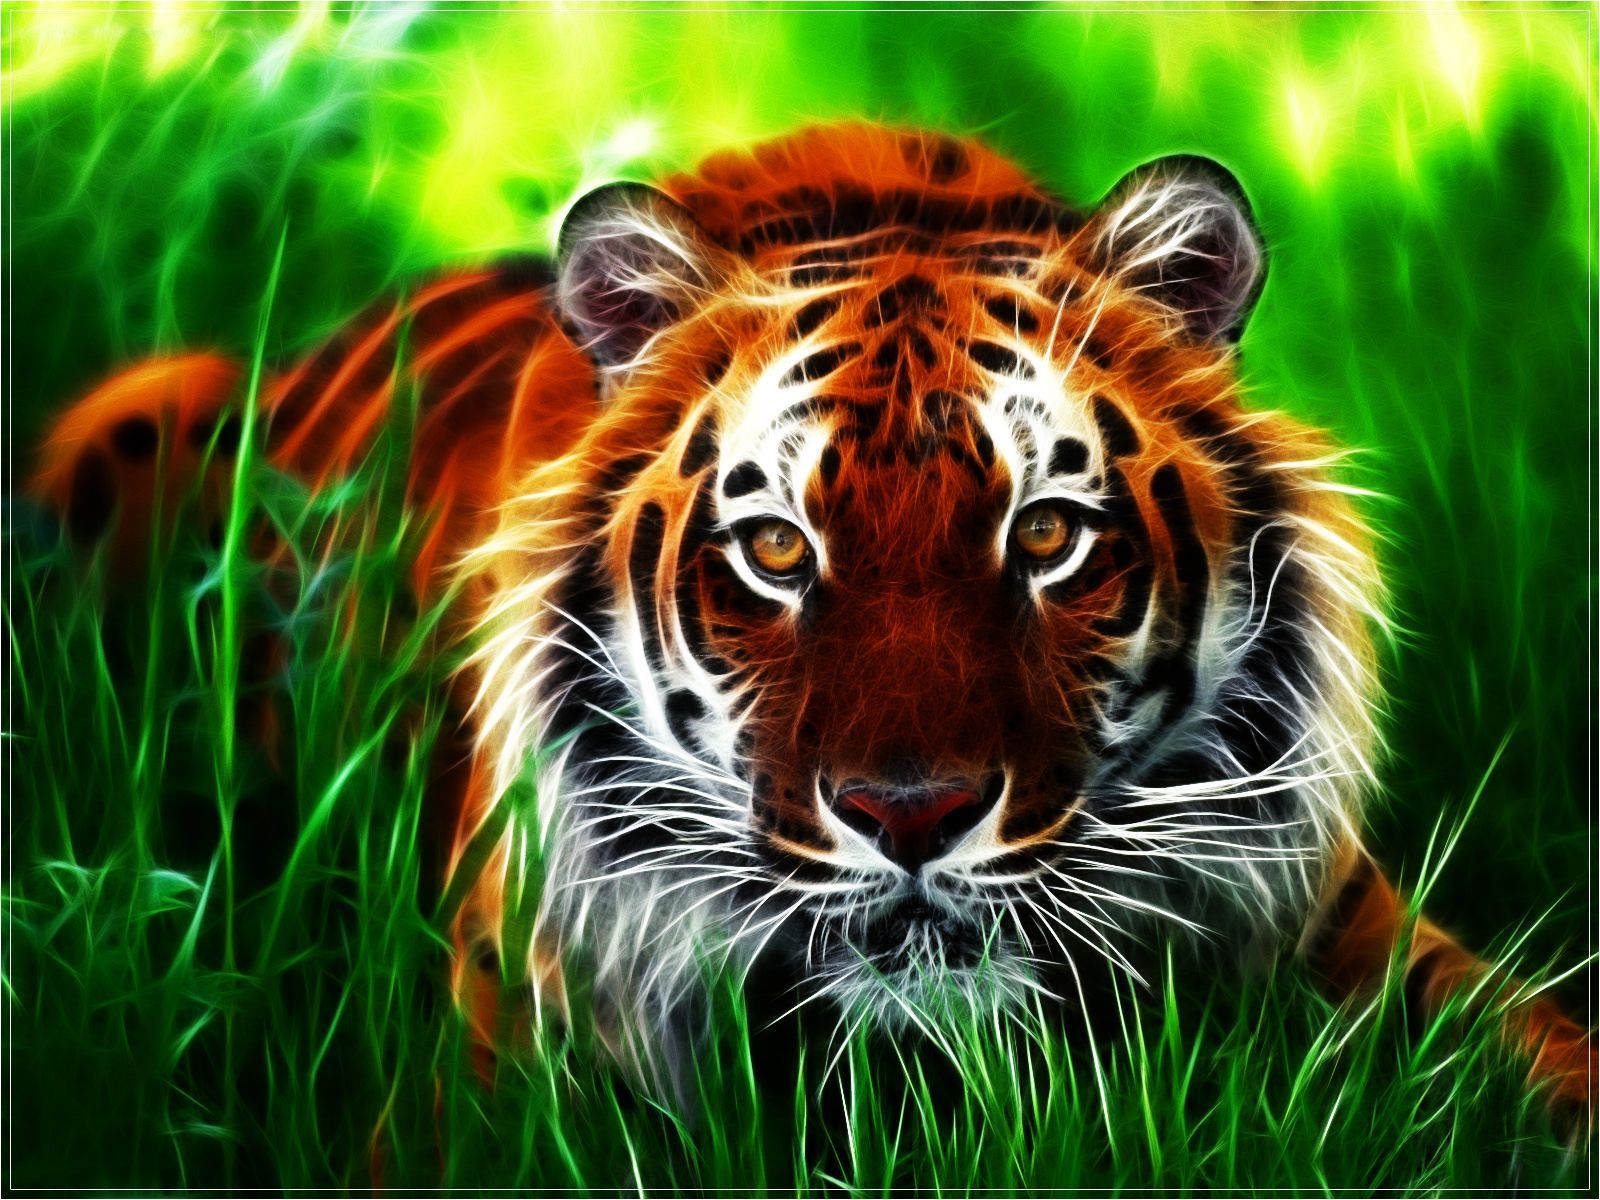 tiger Computer Wallpapers, Desktop Backgrounds | 1920x1440 | ID:472563